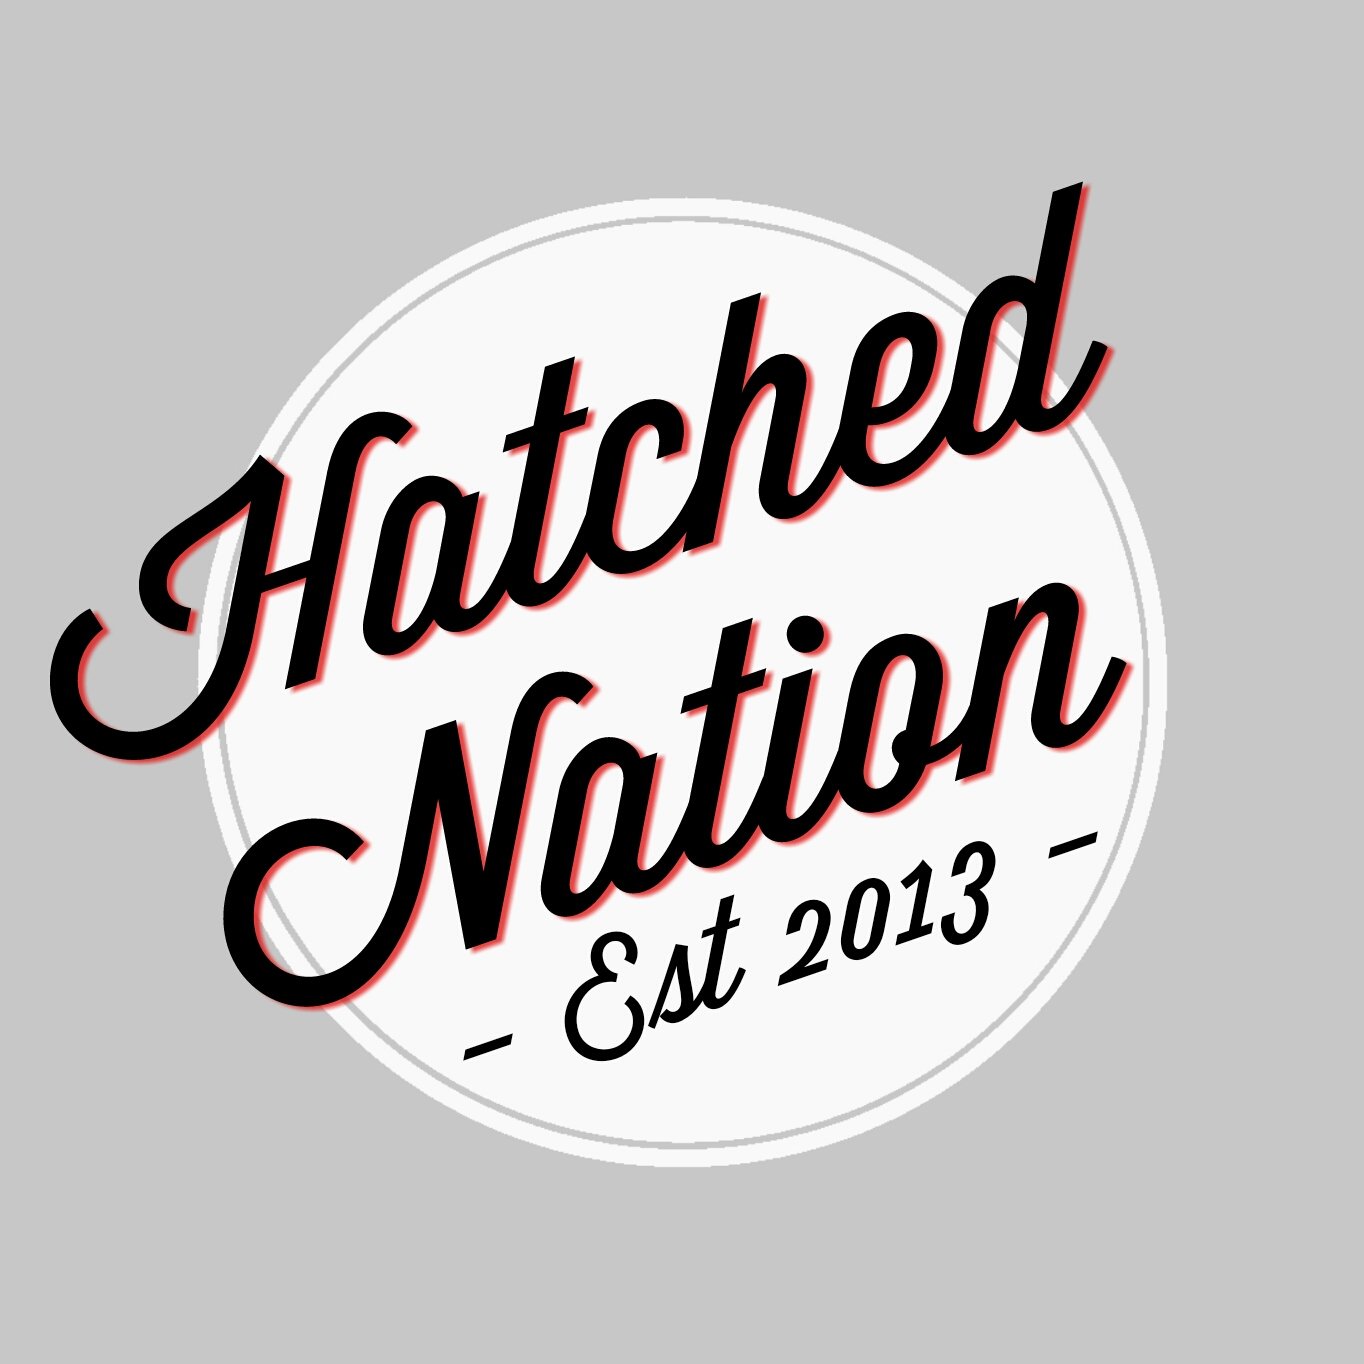 HatchedNation